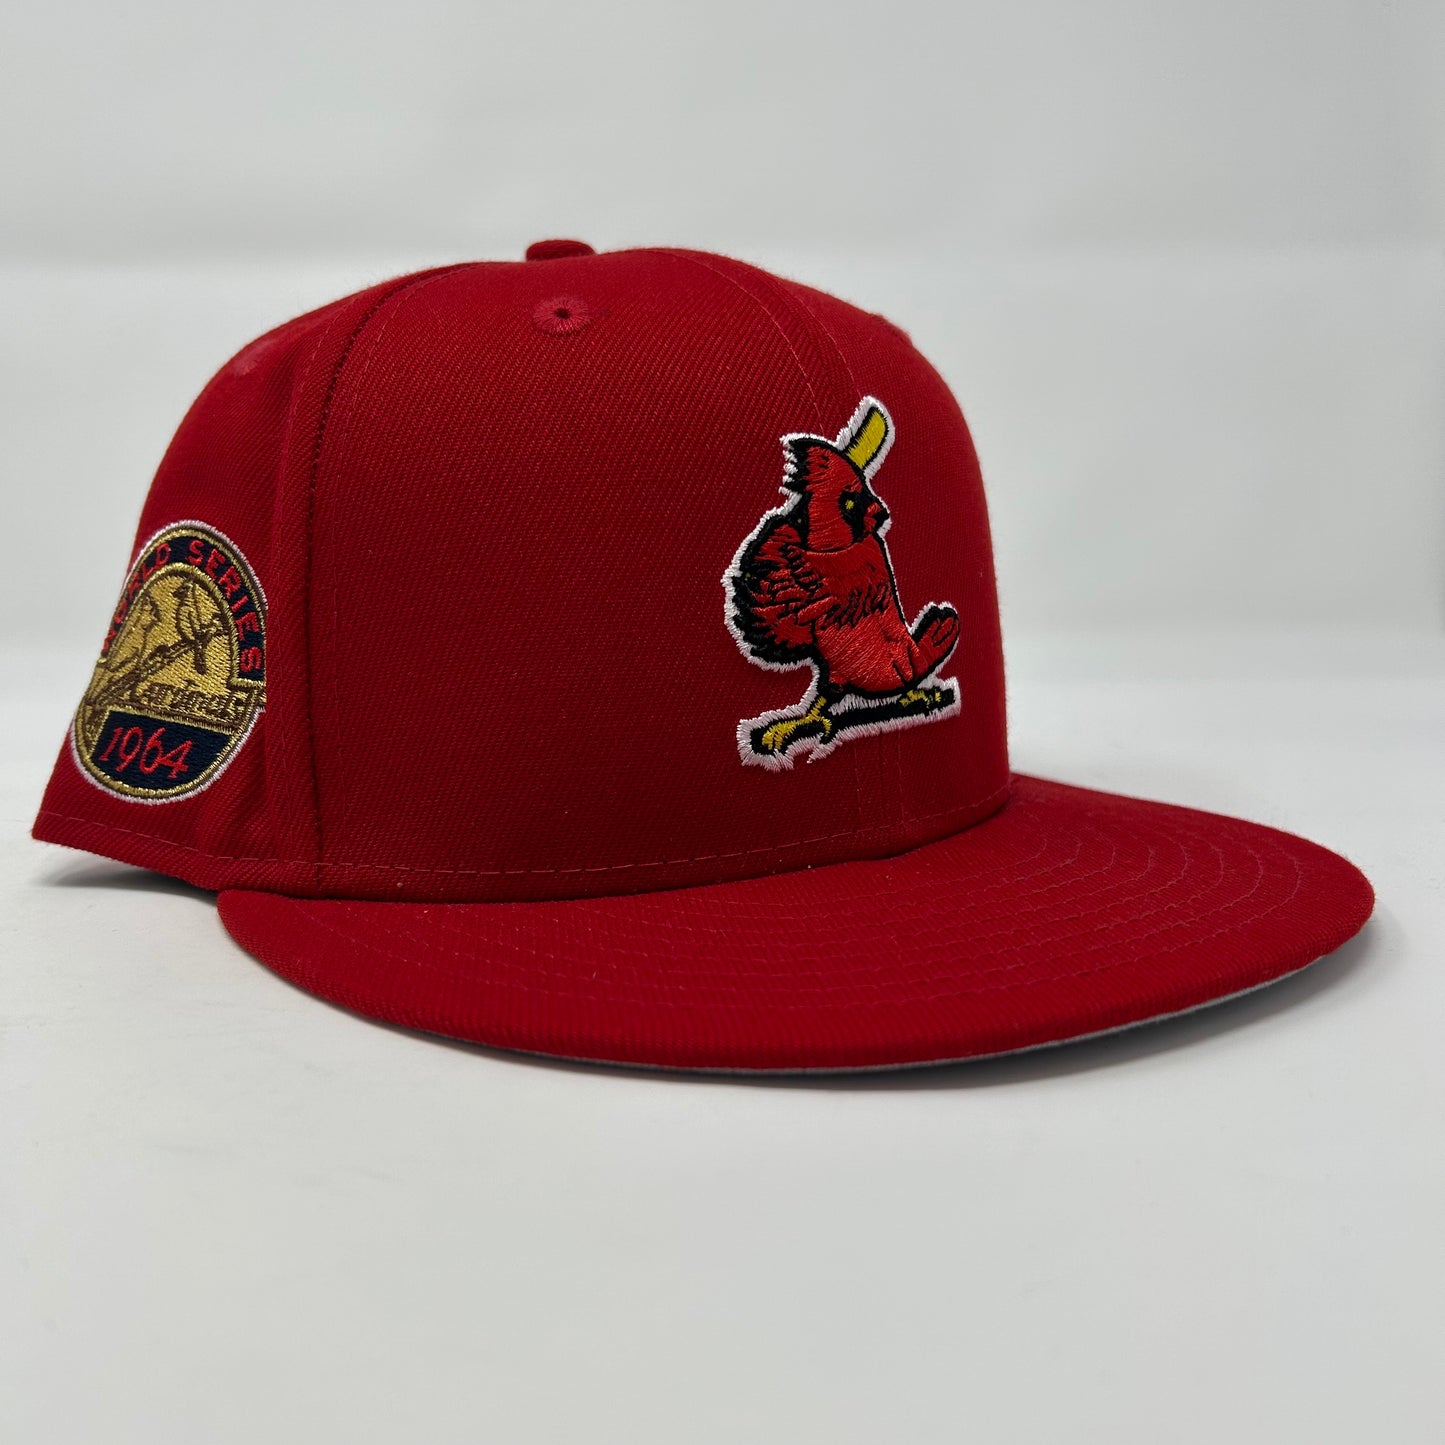 St. Louis Cardinals “Red” Hat